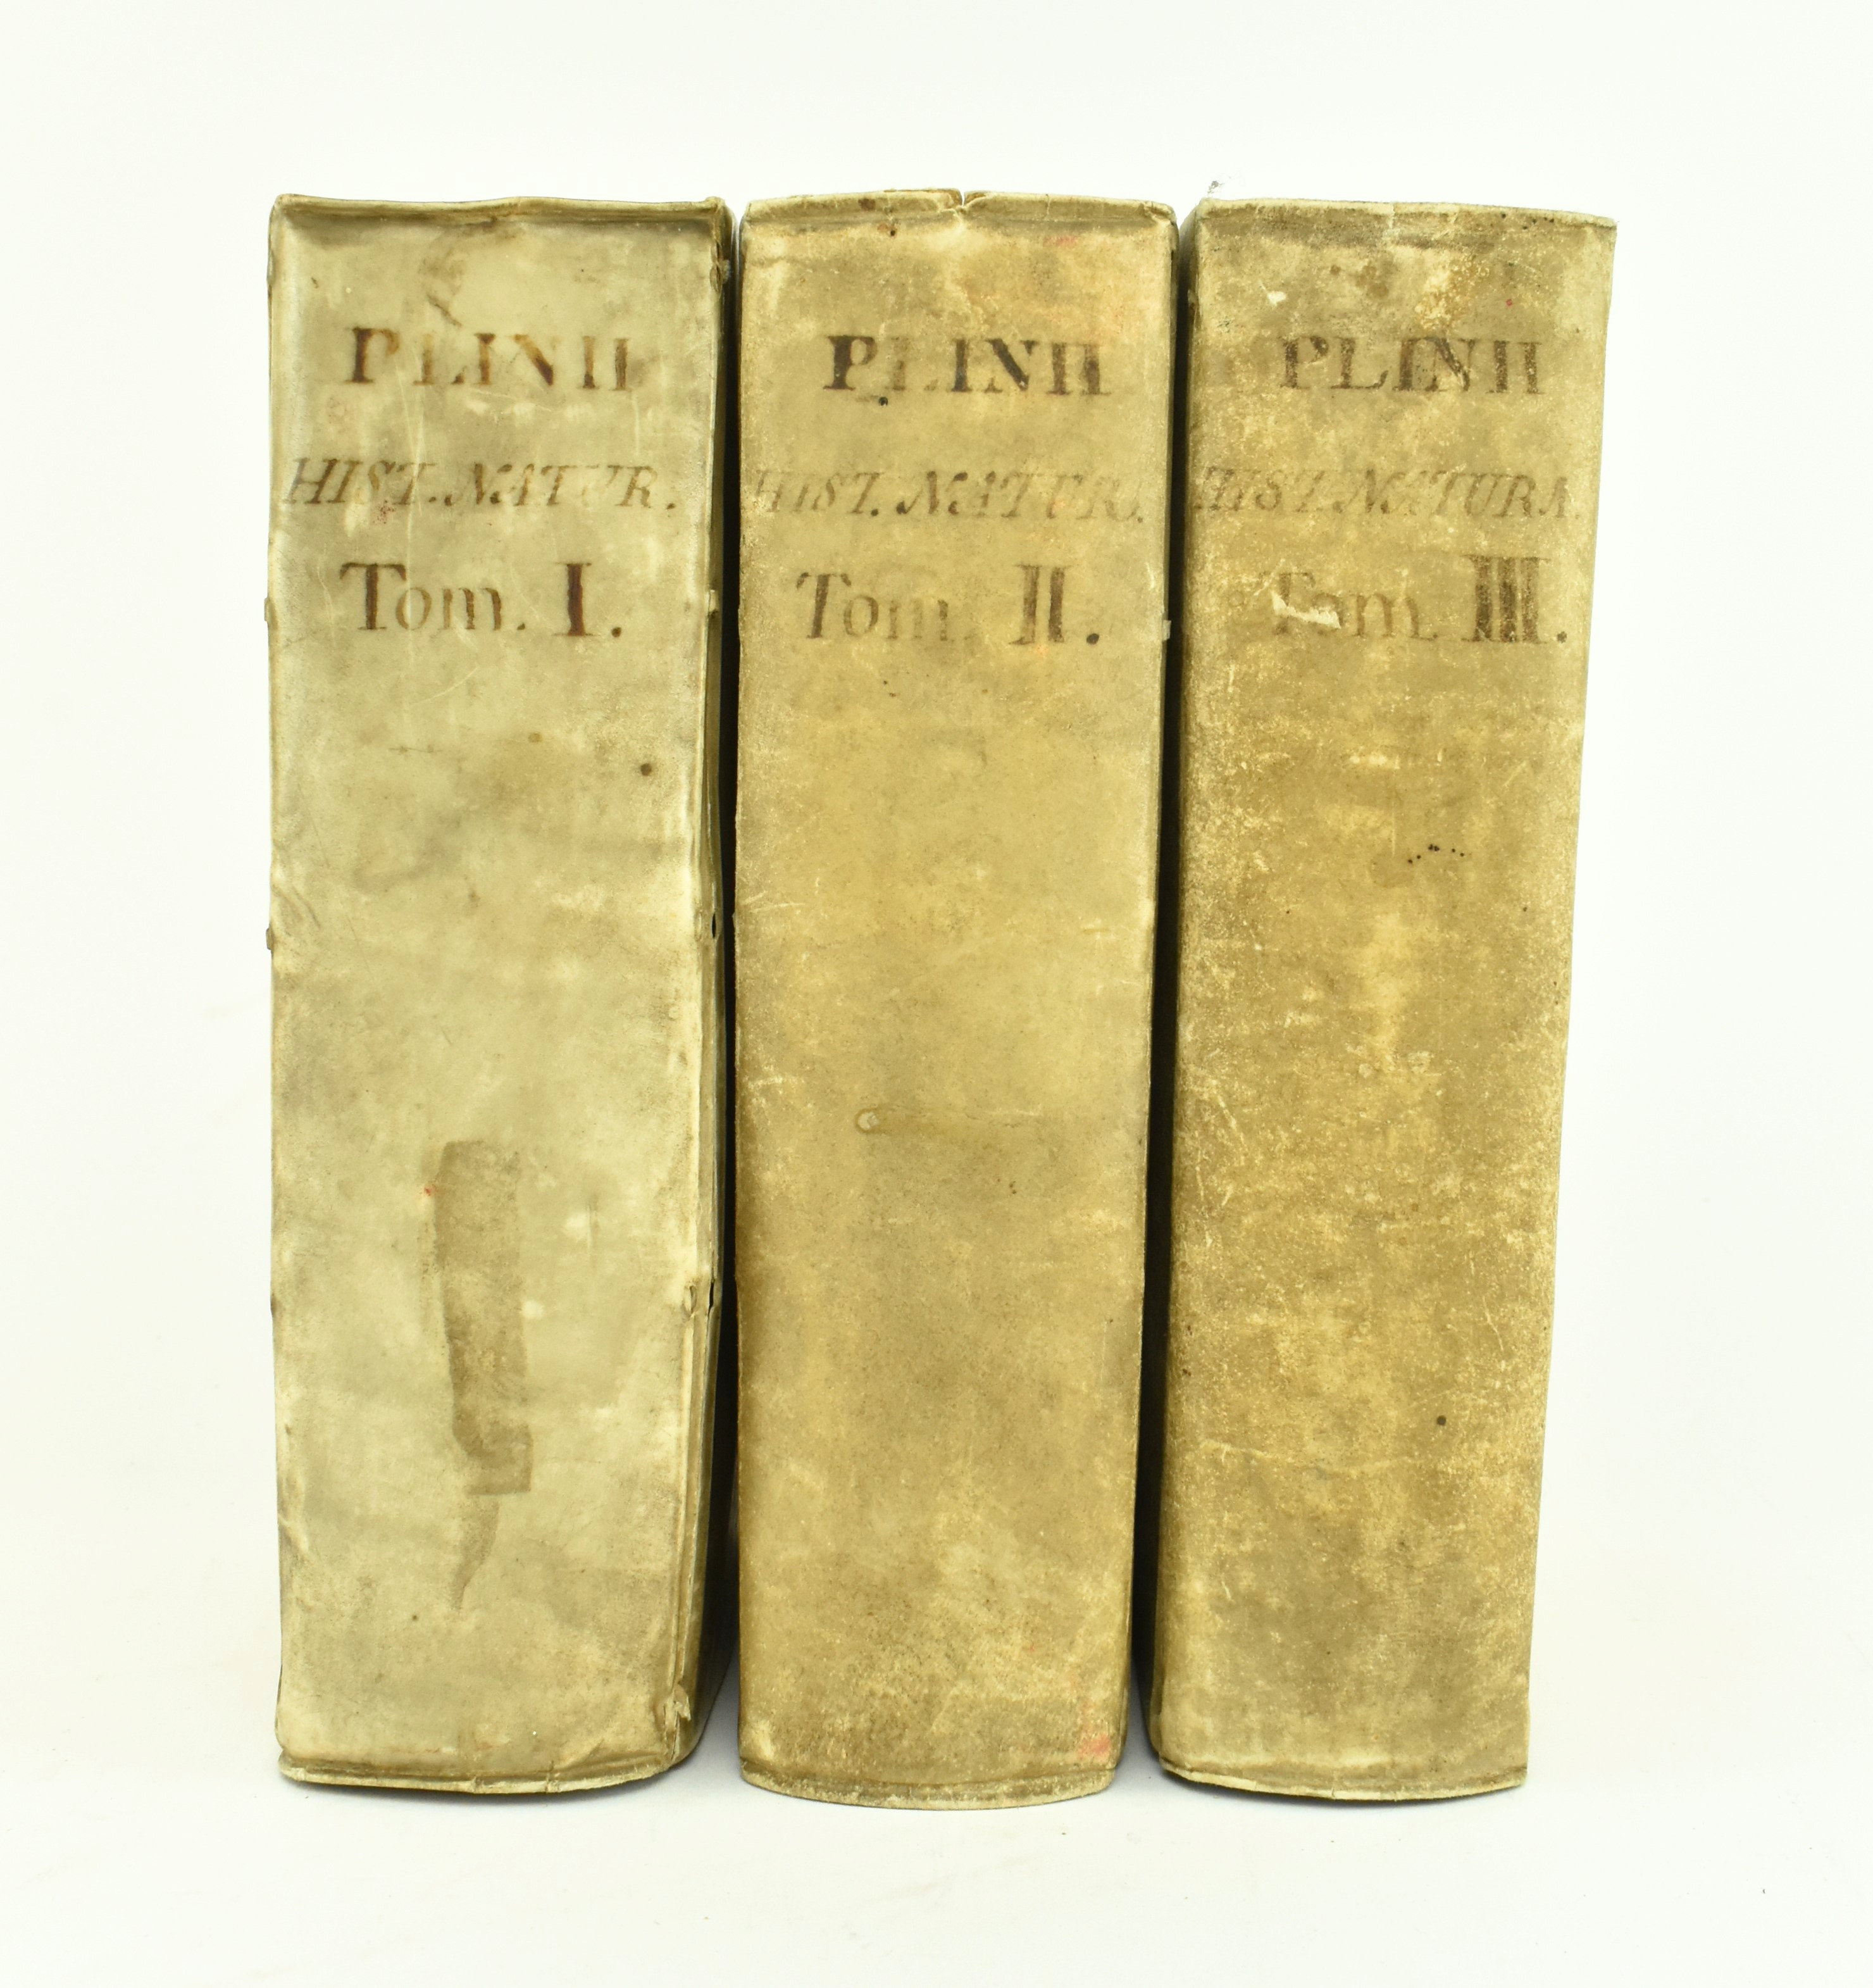 1669 PLINY'S NATURAL HISTORY IN THREE VOLUMES, FULL VELLUM